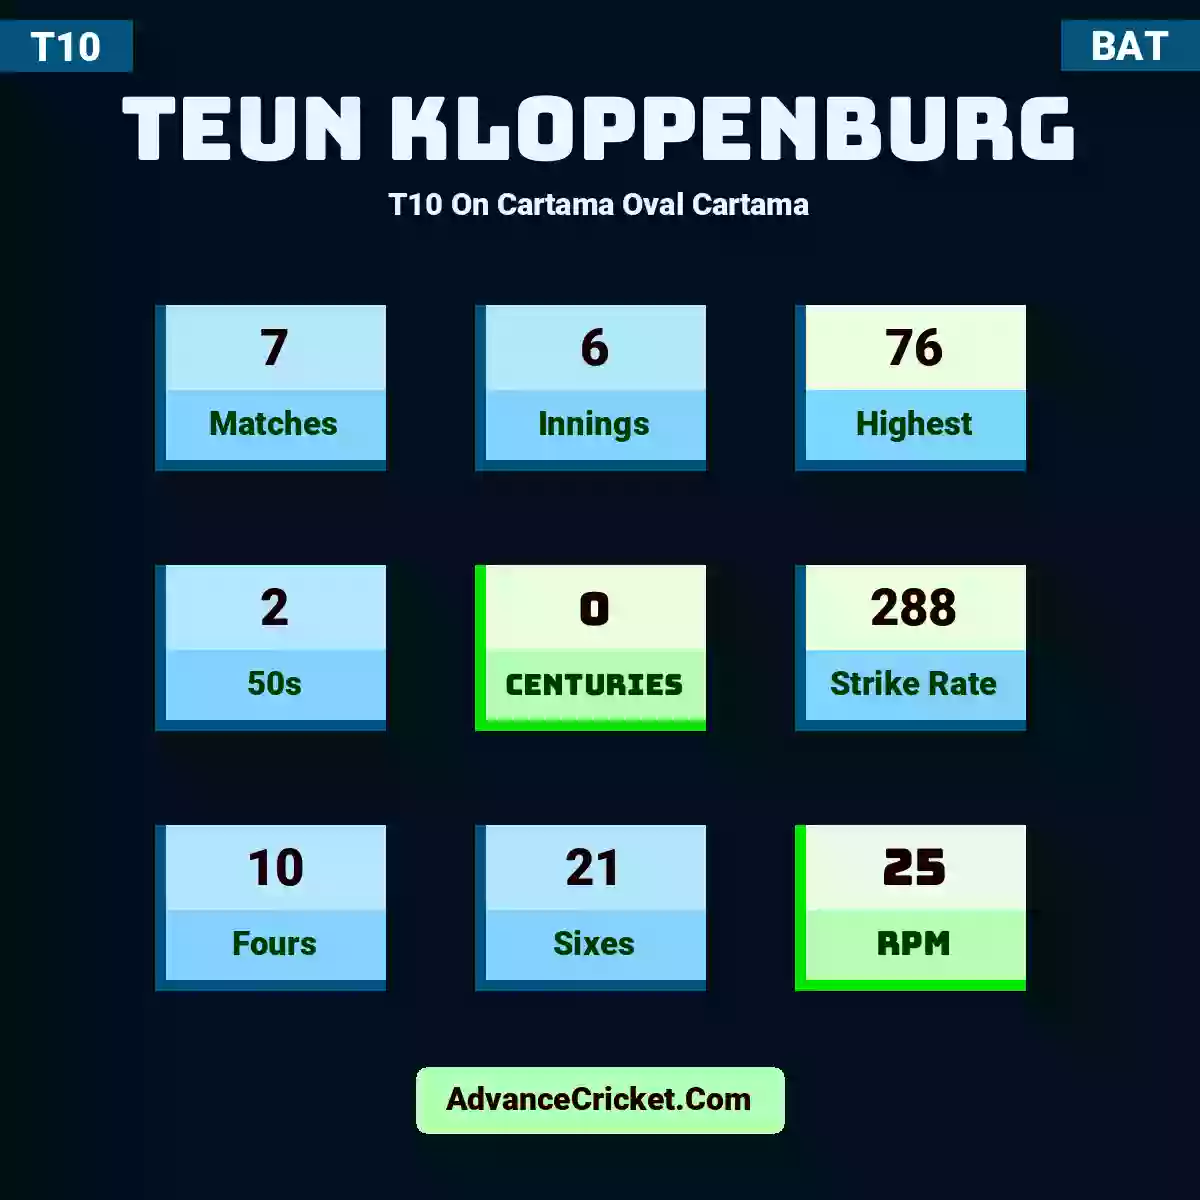 Teun Kloppenburg T10  On Cartama Oval Cartama, Teun Kloppenburg played 7 matches, scored 76 runs as highest, 2 half-centuries, and 0 centuries, with a strike rate of 288. T.Kloppenburg hit 10 fours and 21 sixes, with an RPM of 25.